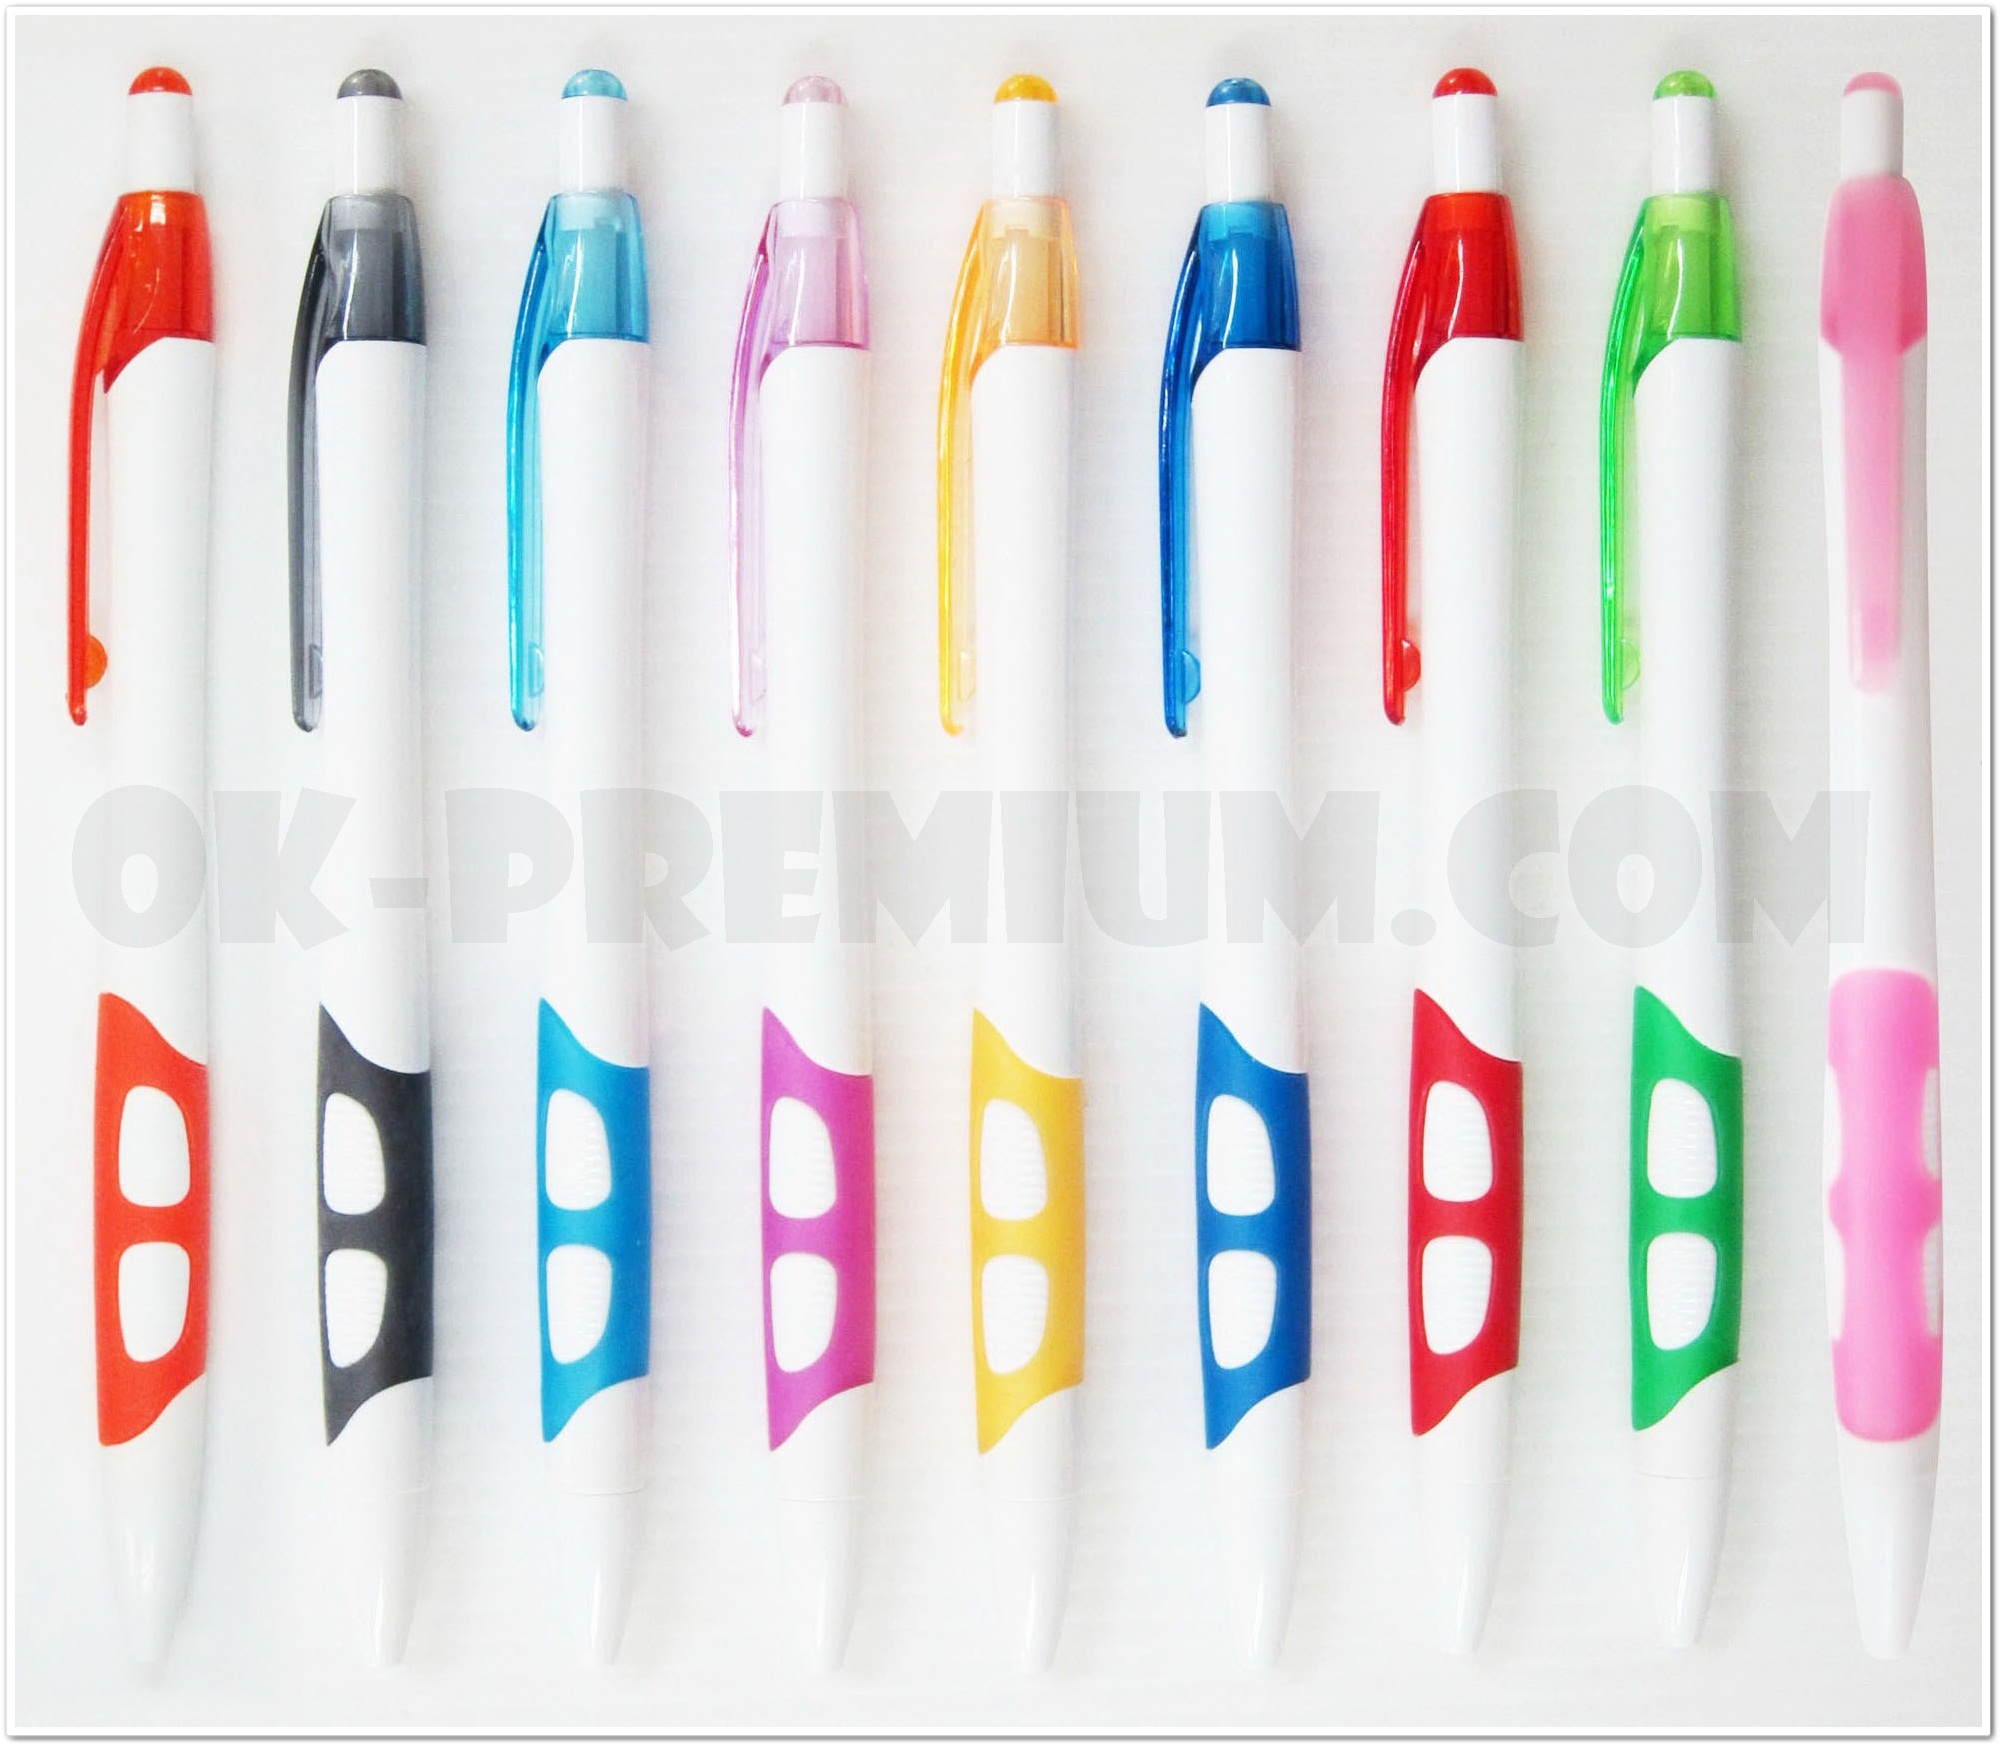 P009 ปากกาพลาสติก ปากกา ปากกาพรีเมี่ยม ปากกาพลาสติก พร้อมสกรีน สกรีนฟรี ของพรีเมี่ยม สินค้าพรีเมี่ยม ของนำเข้า สินค้านำเข้า ของแจก ของแถม ของชำร่วย มีให้เลือกหลายแบบค่ะ